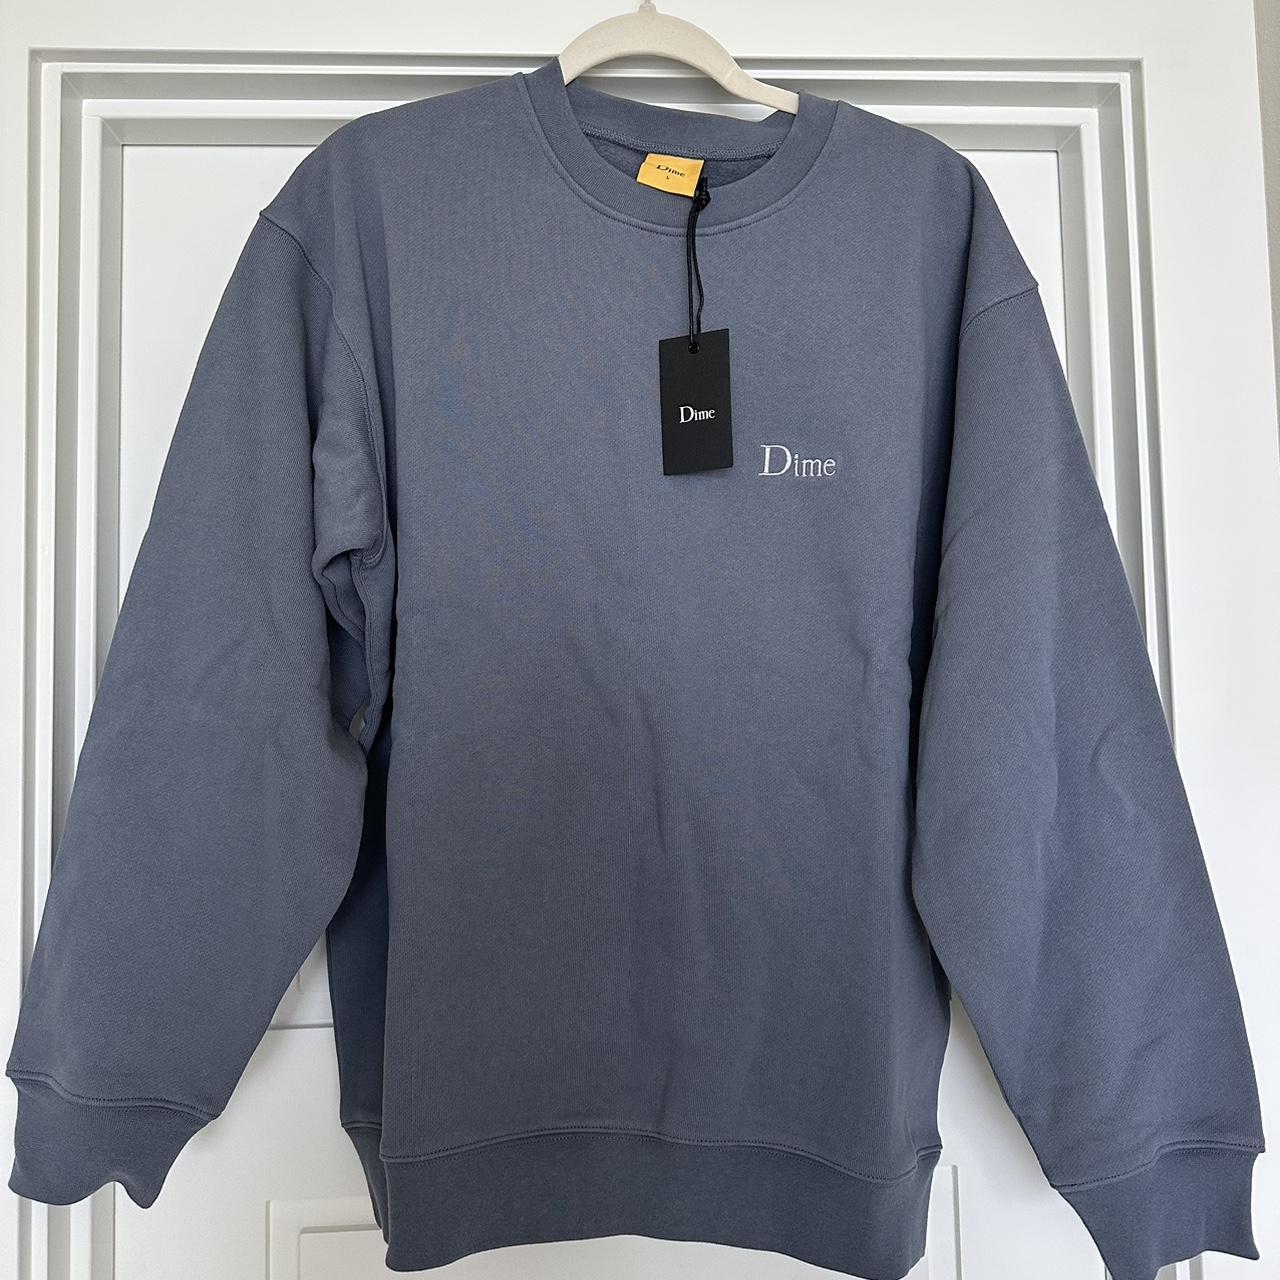 Dime Men's Blue and Grey Sweatshirt